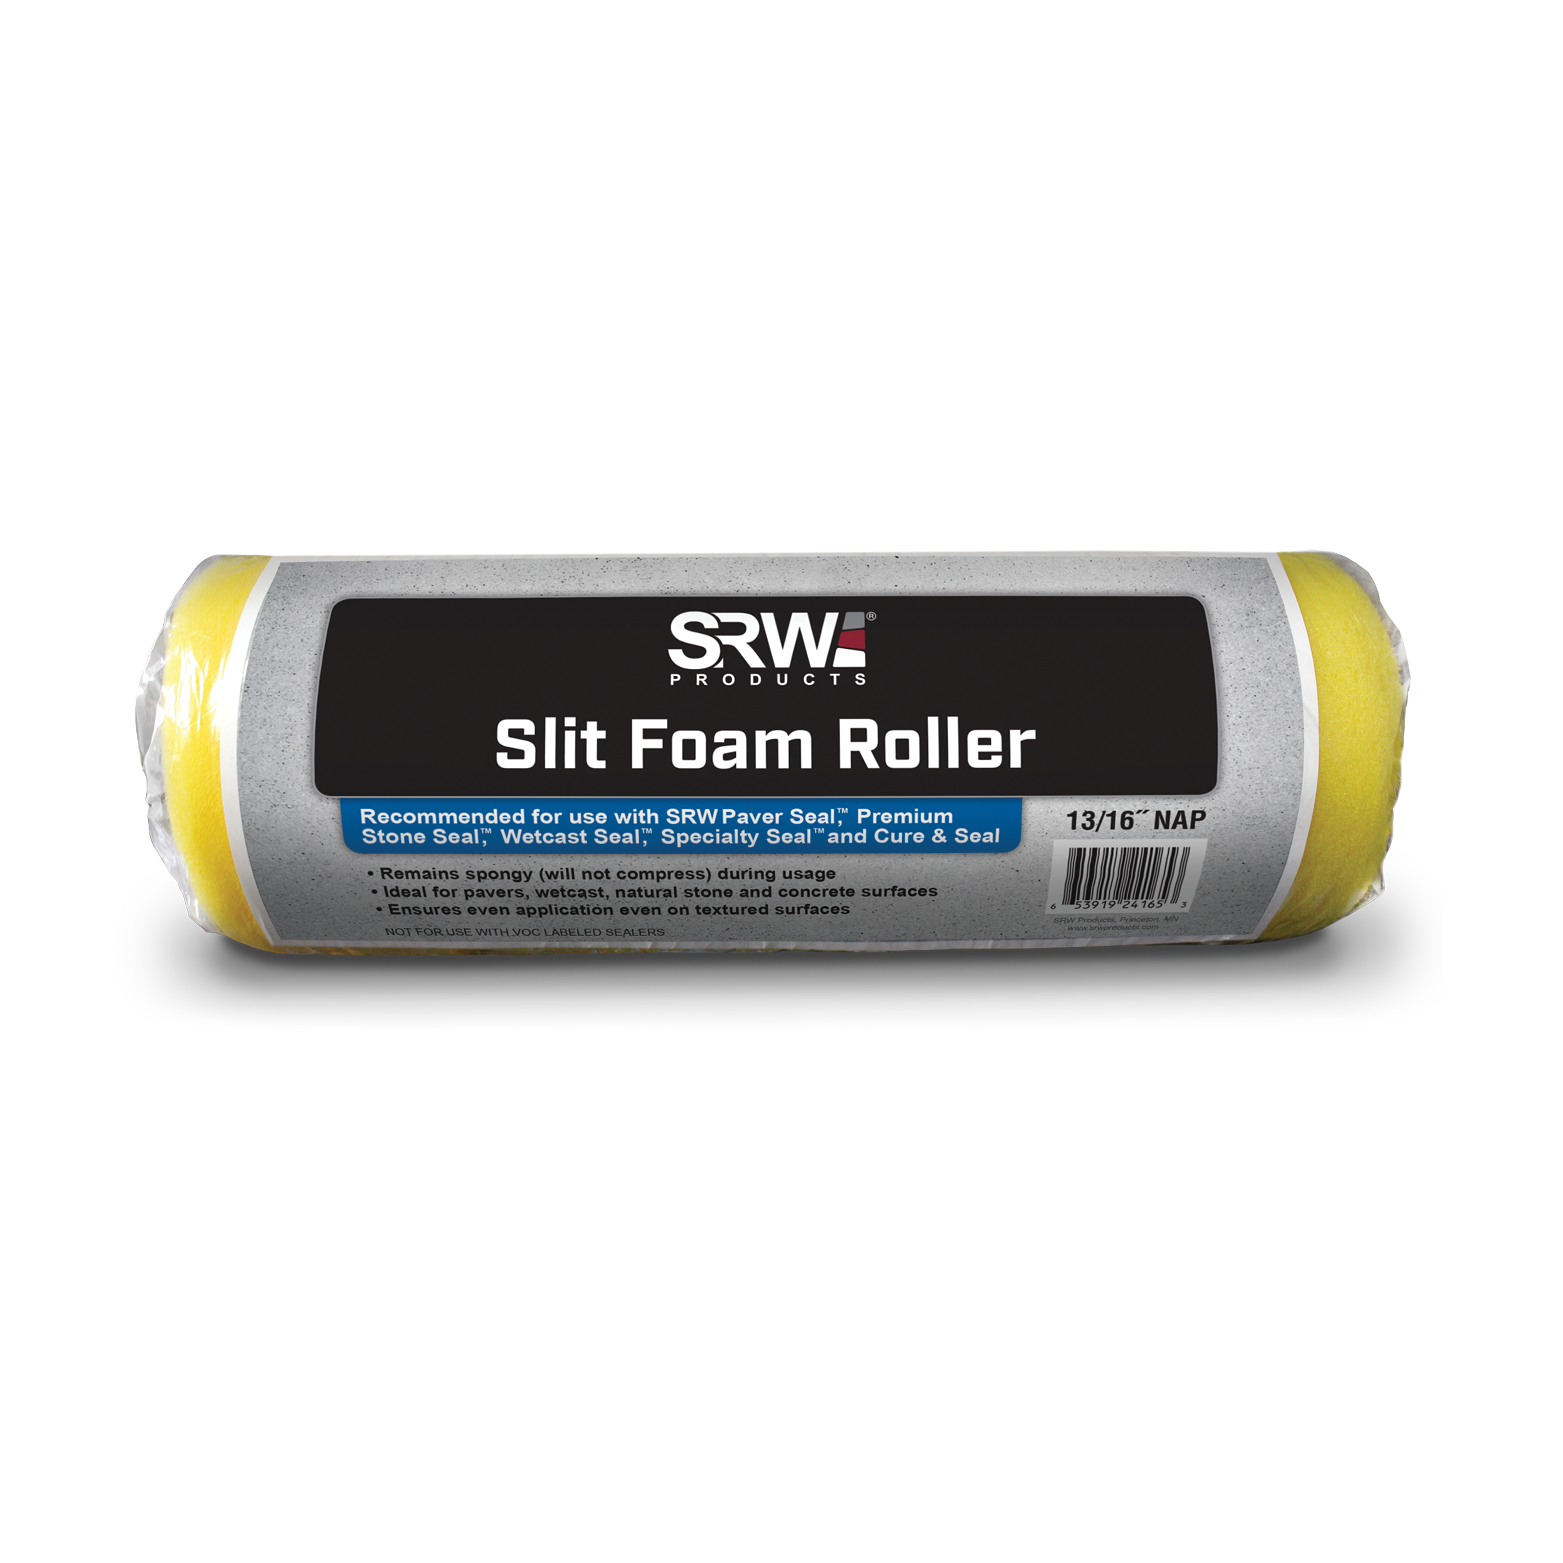 SRW products slit foam roller 13/16" nap